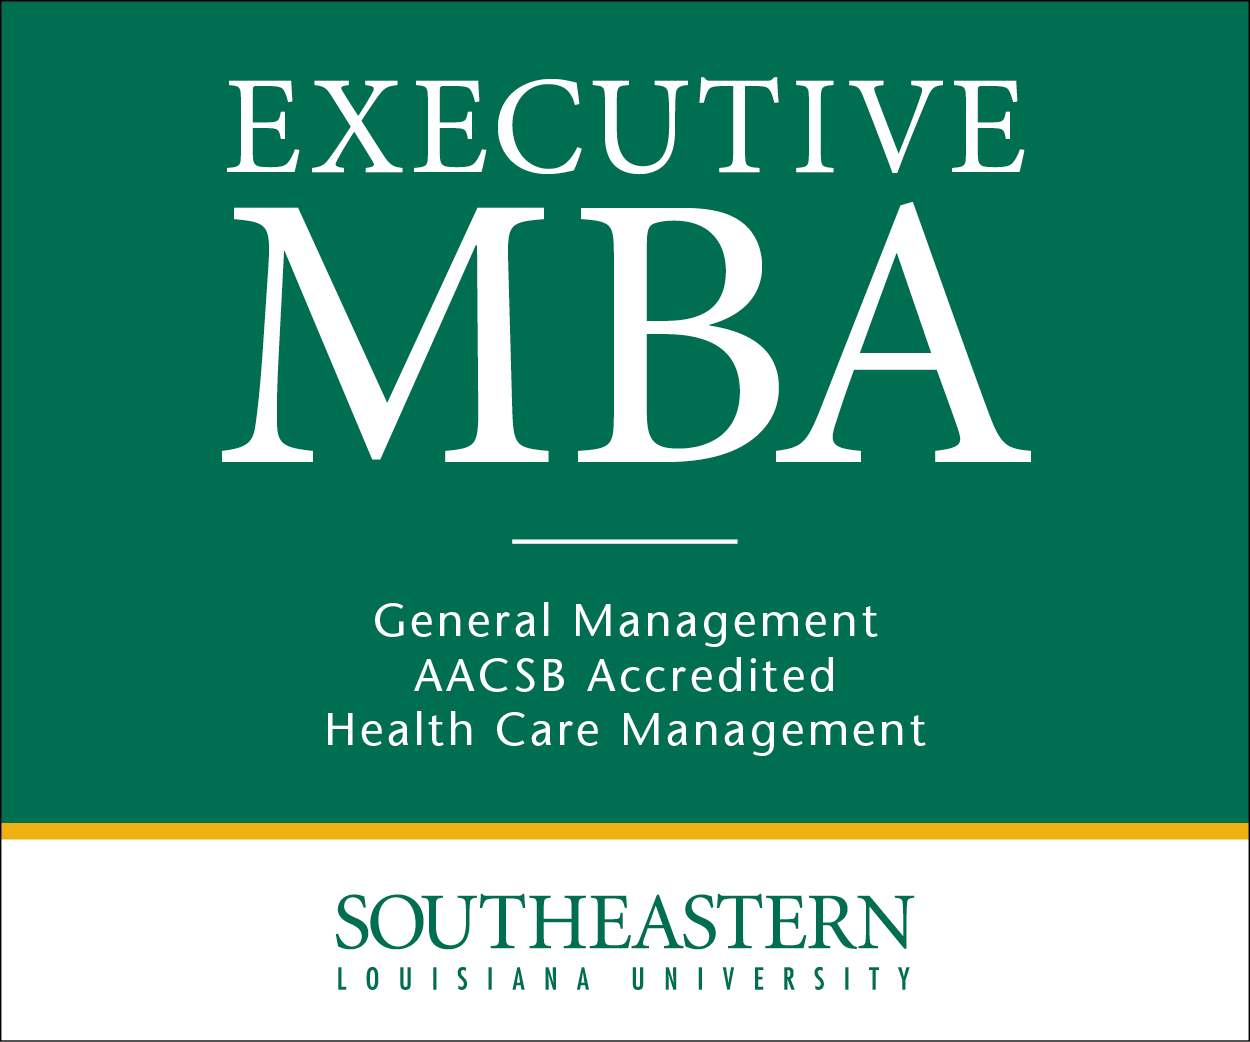 Southeastern Executive MBA 